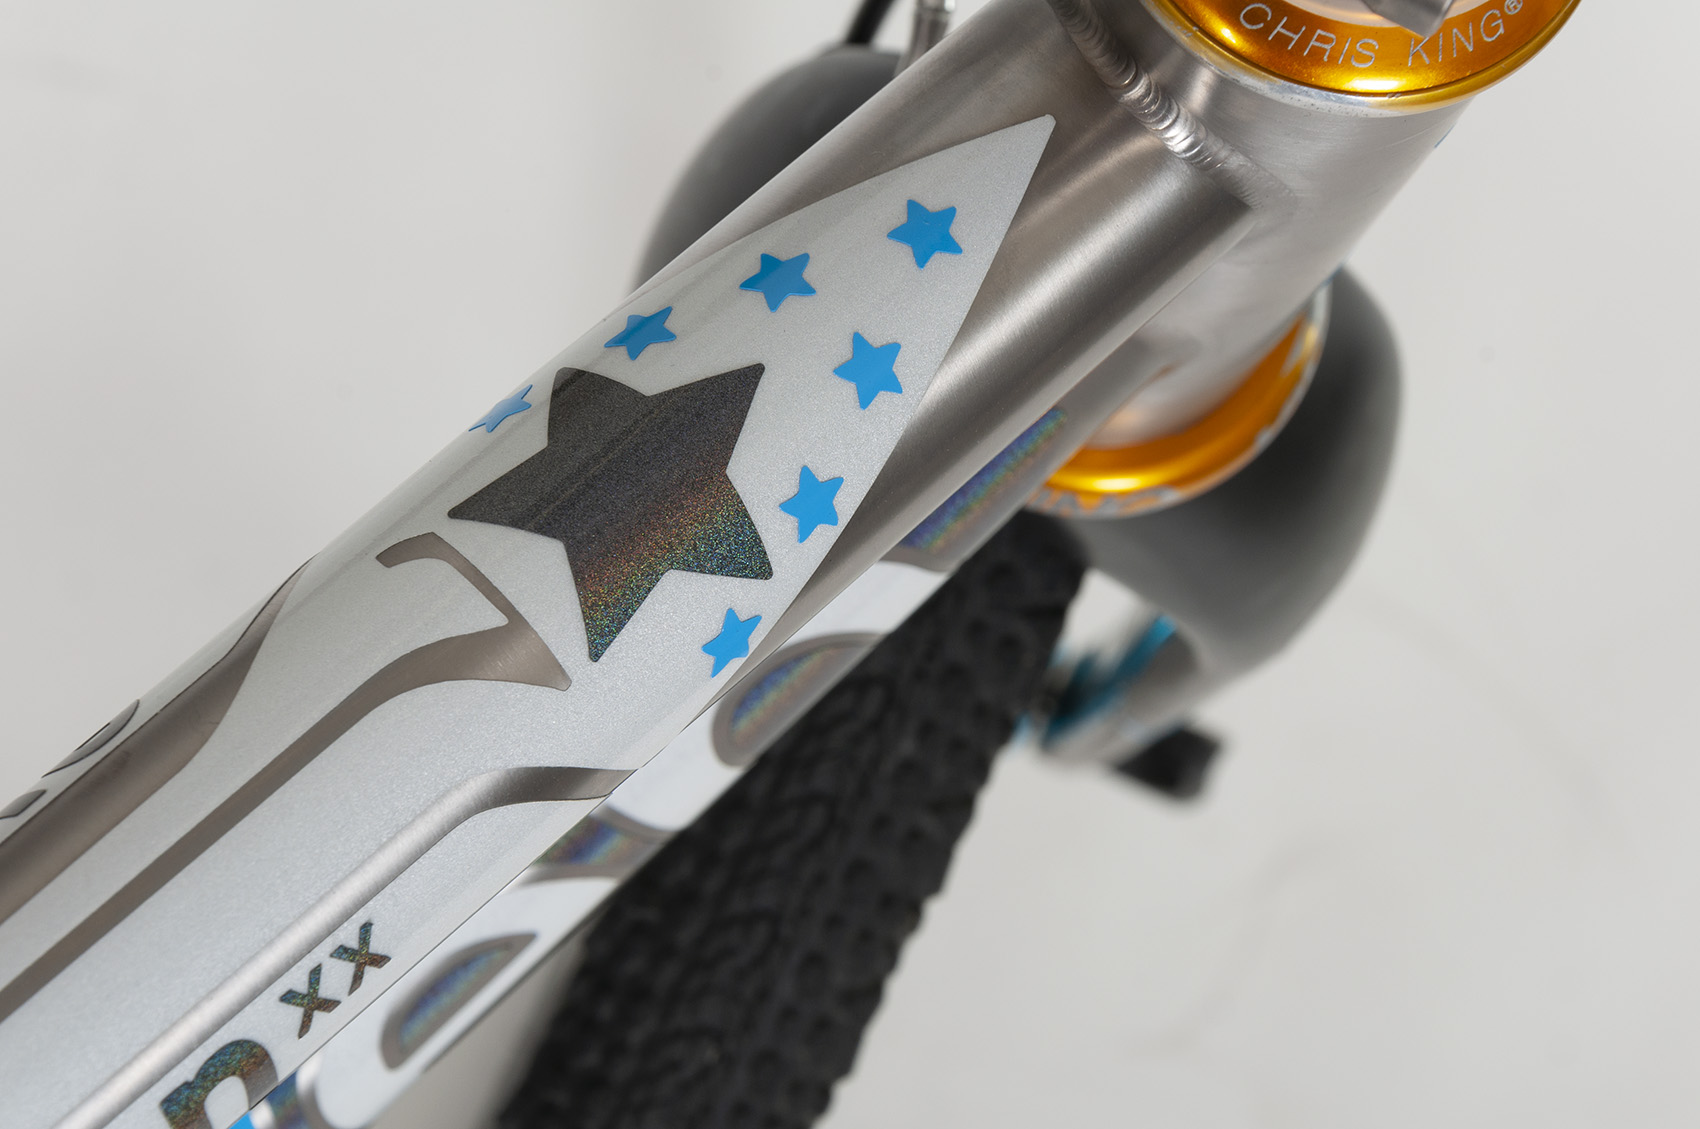 custom star spangled graphics - top tube detail